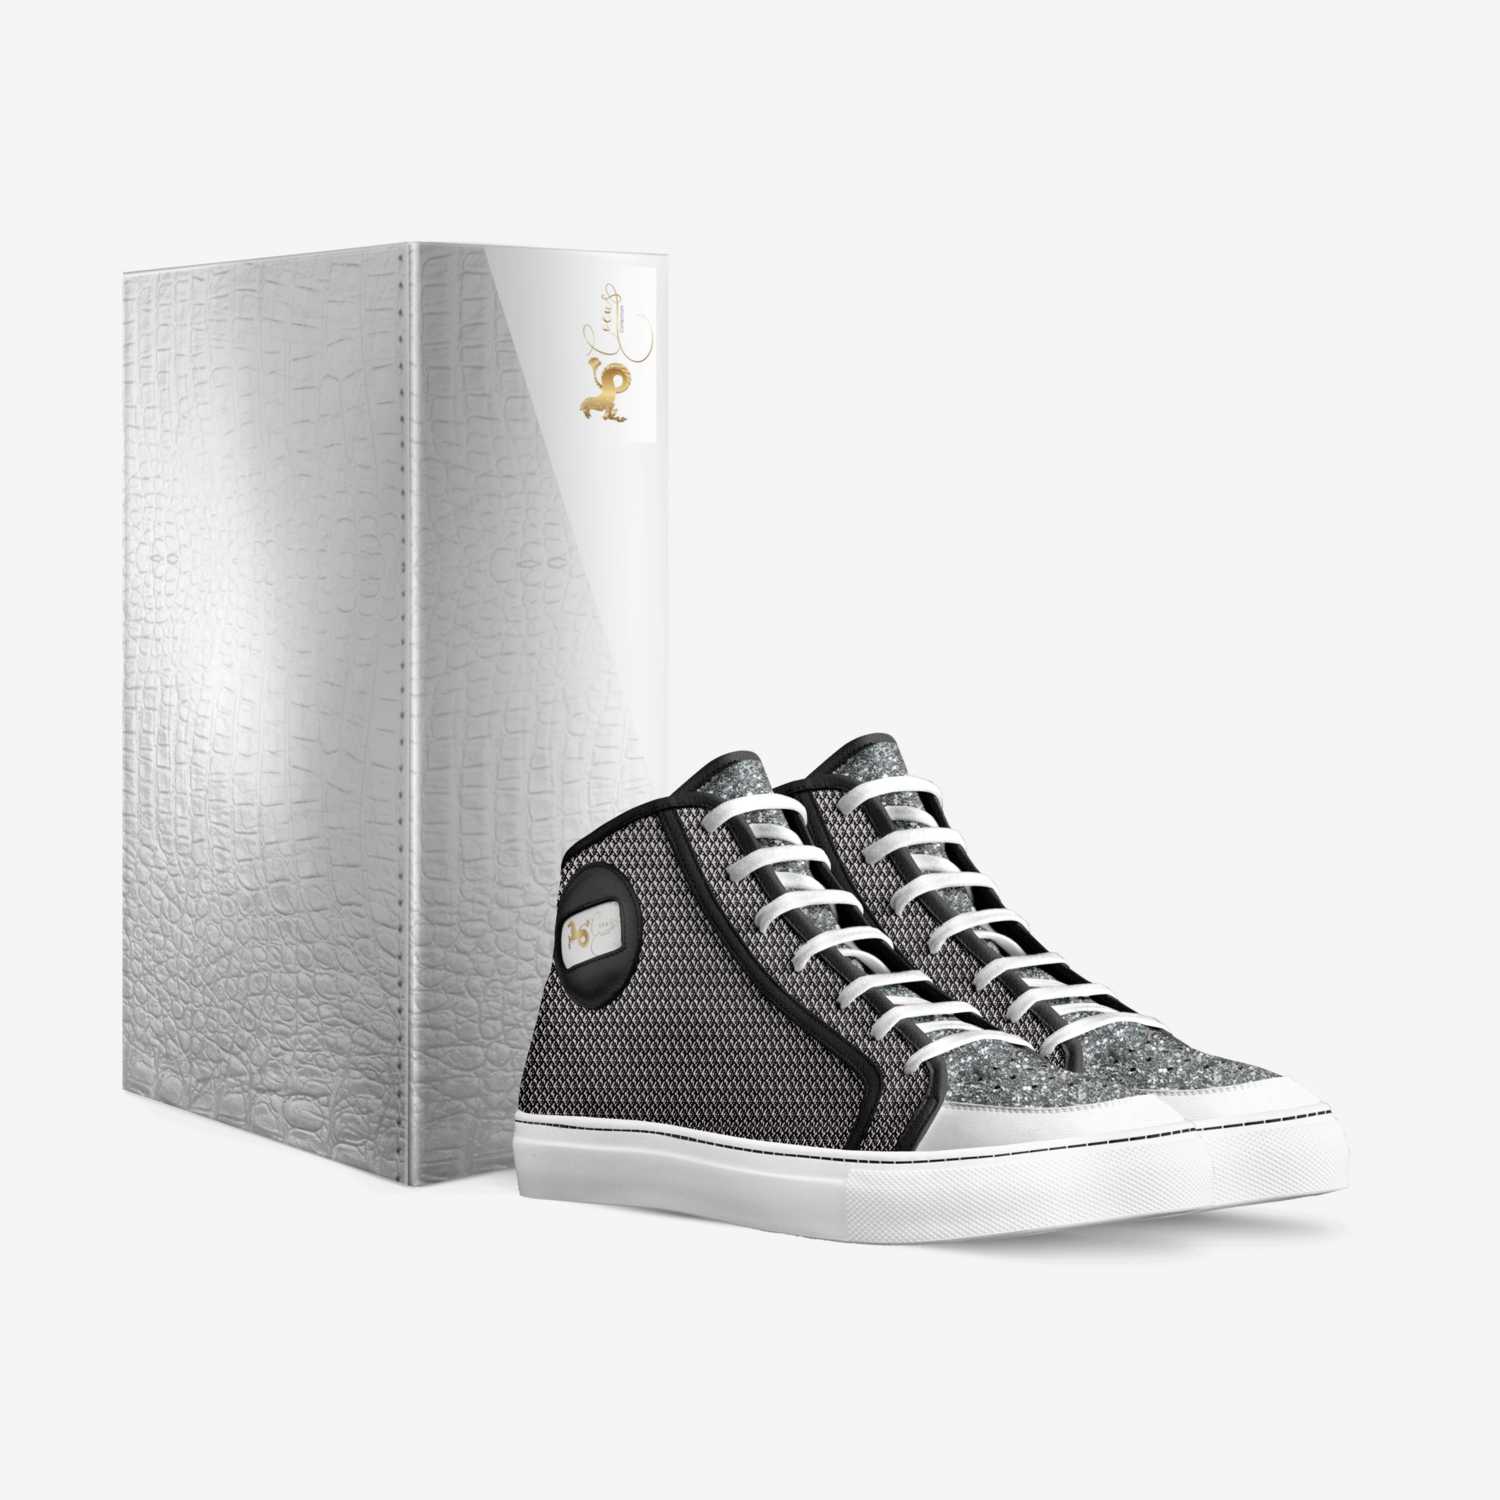 Coeus Collection custom made in Italy shoes by Dalton Mazarura | Box view